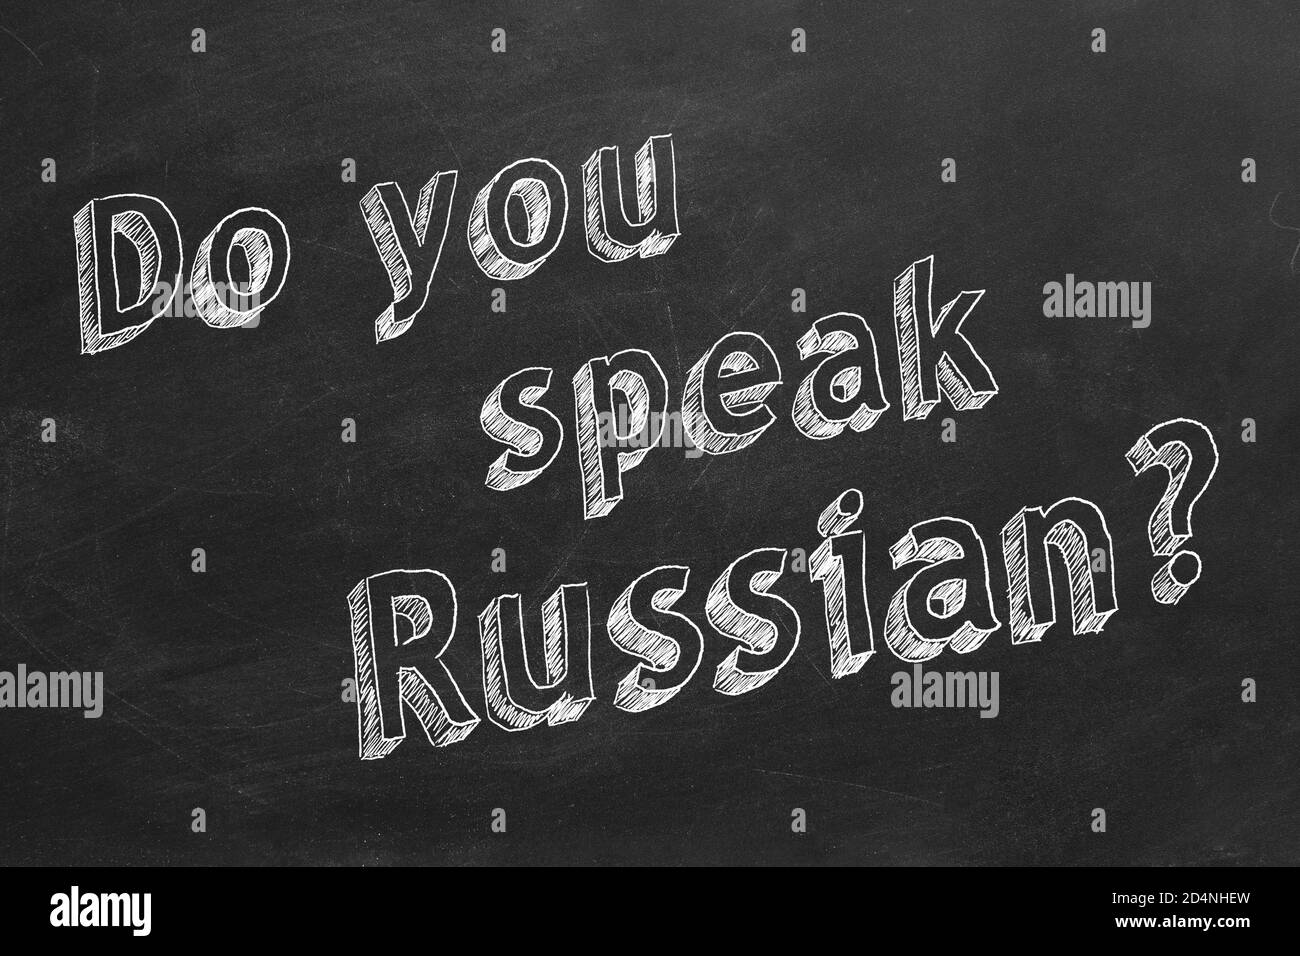 Hand drawing "Do you speak Russian?" on blackboard. Stock Photo